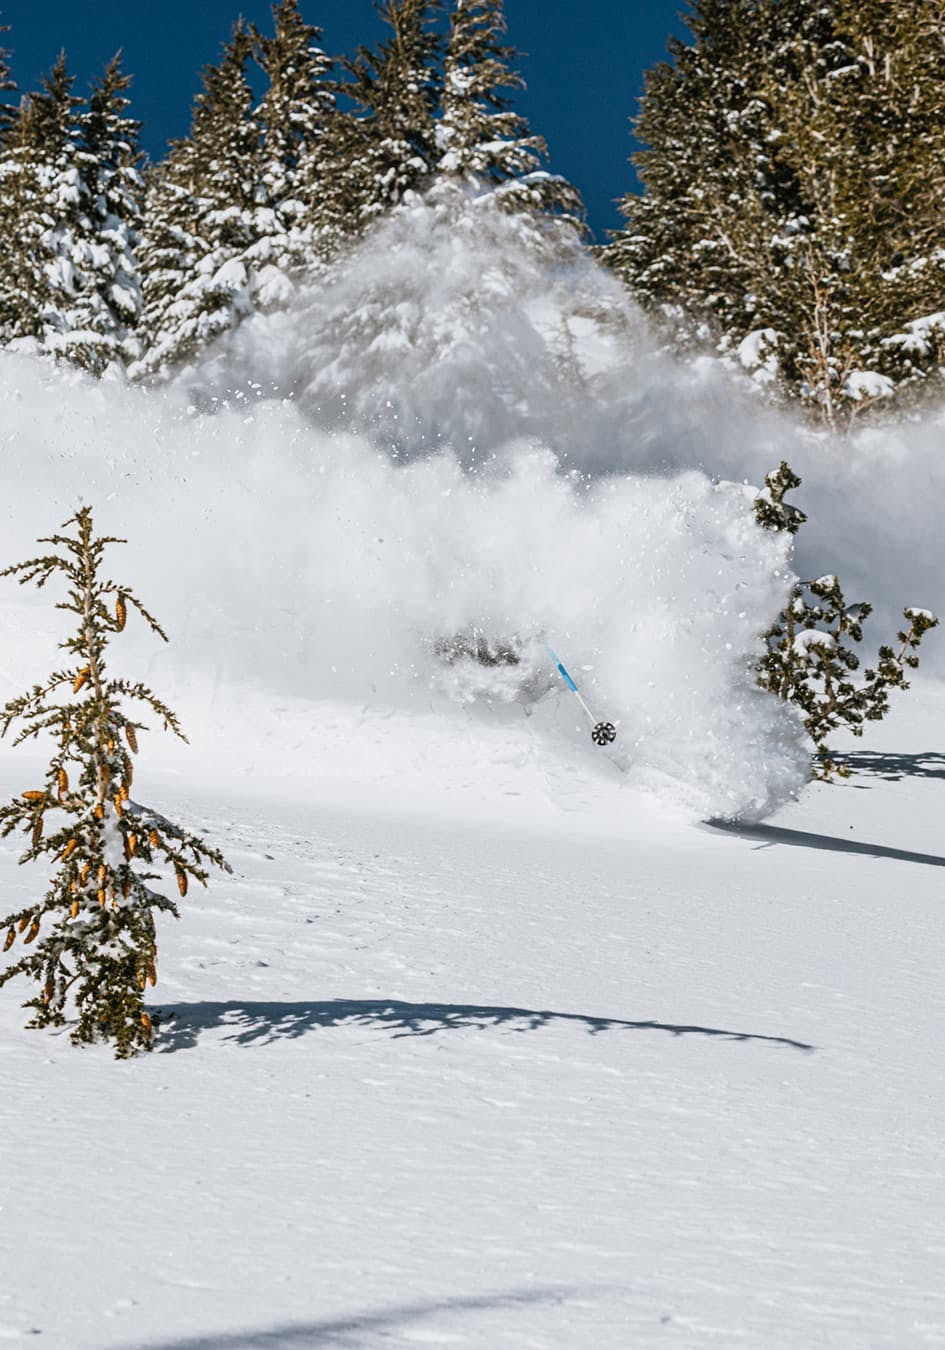 Skier in deep powder